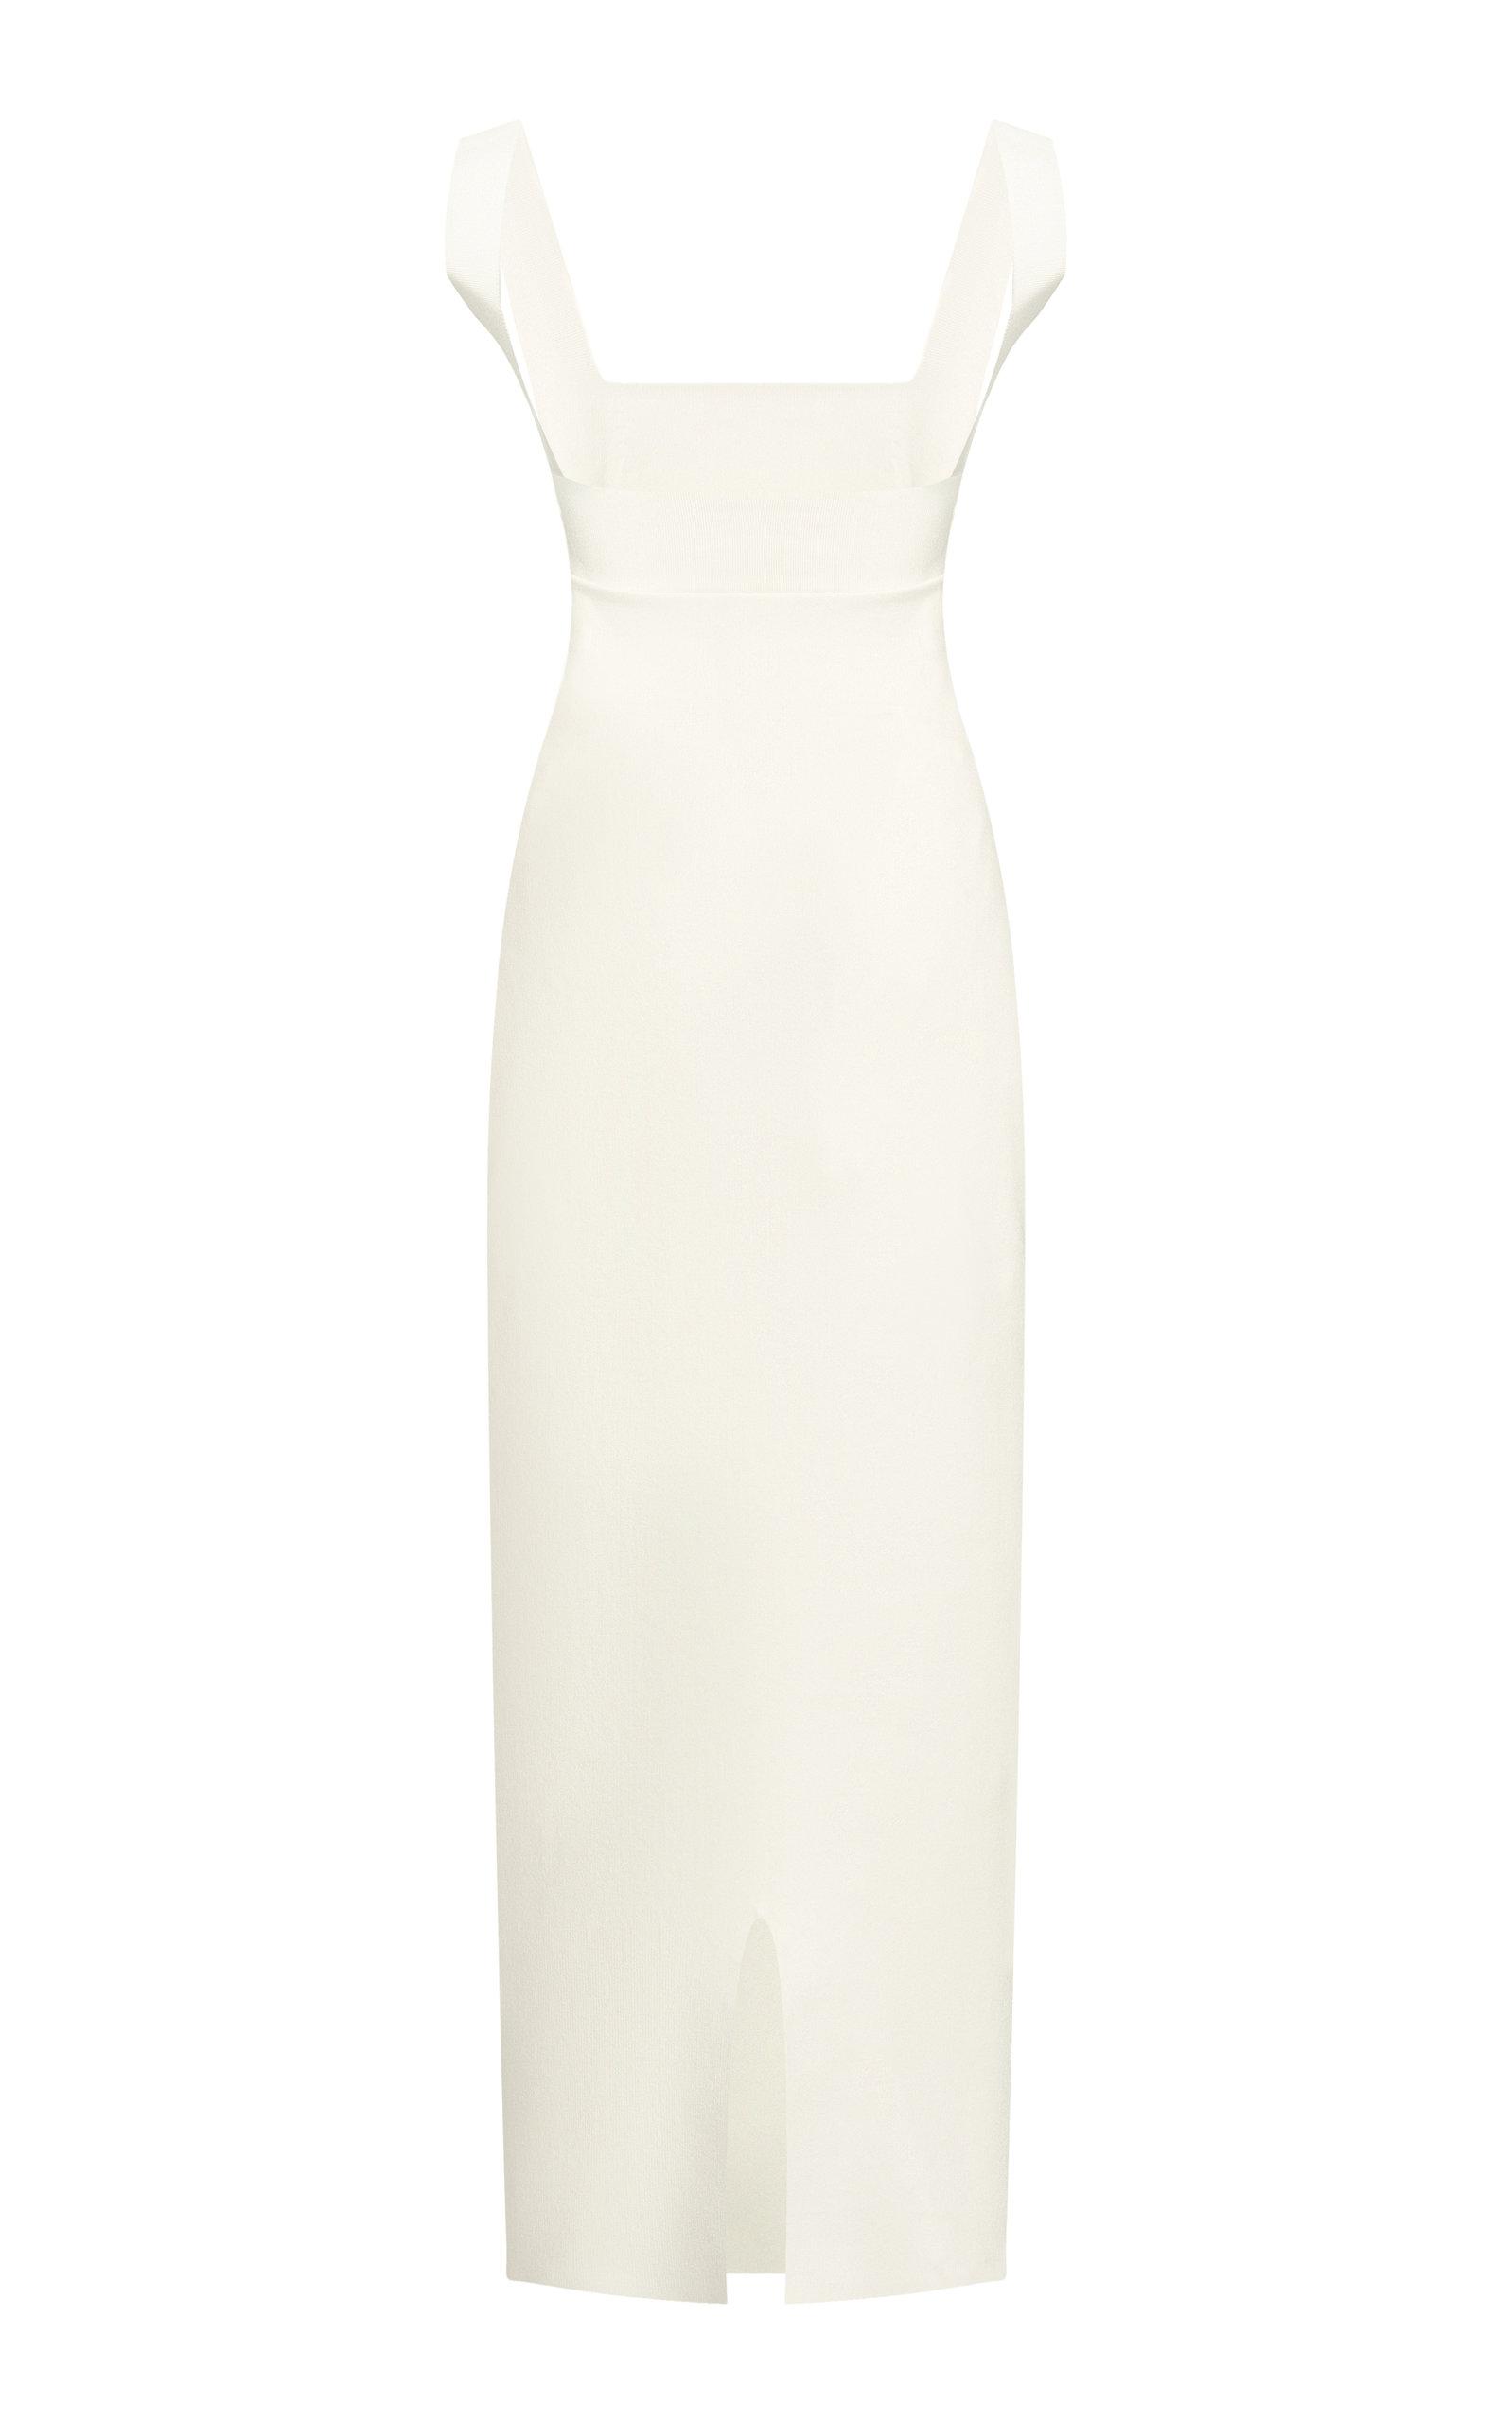 Victoria Beckham Vb Body Cutout Midi Dress in White | Lyst